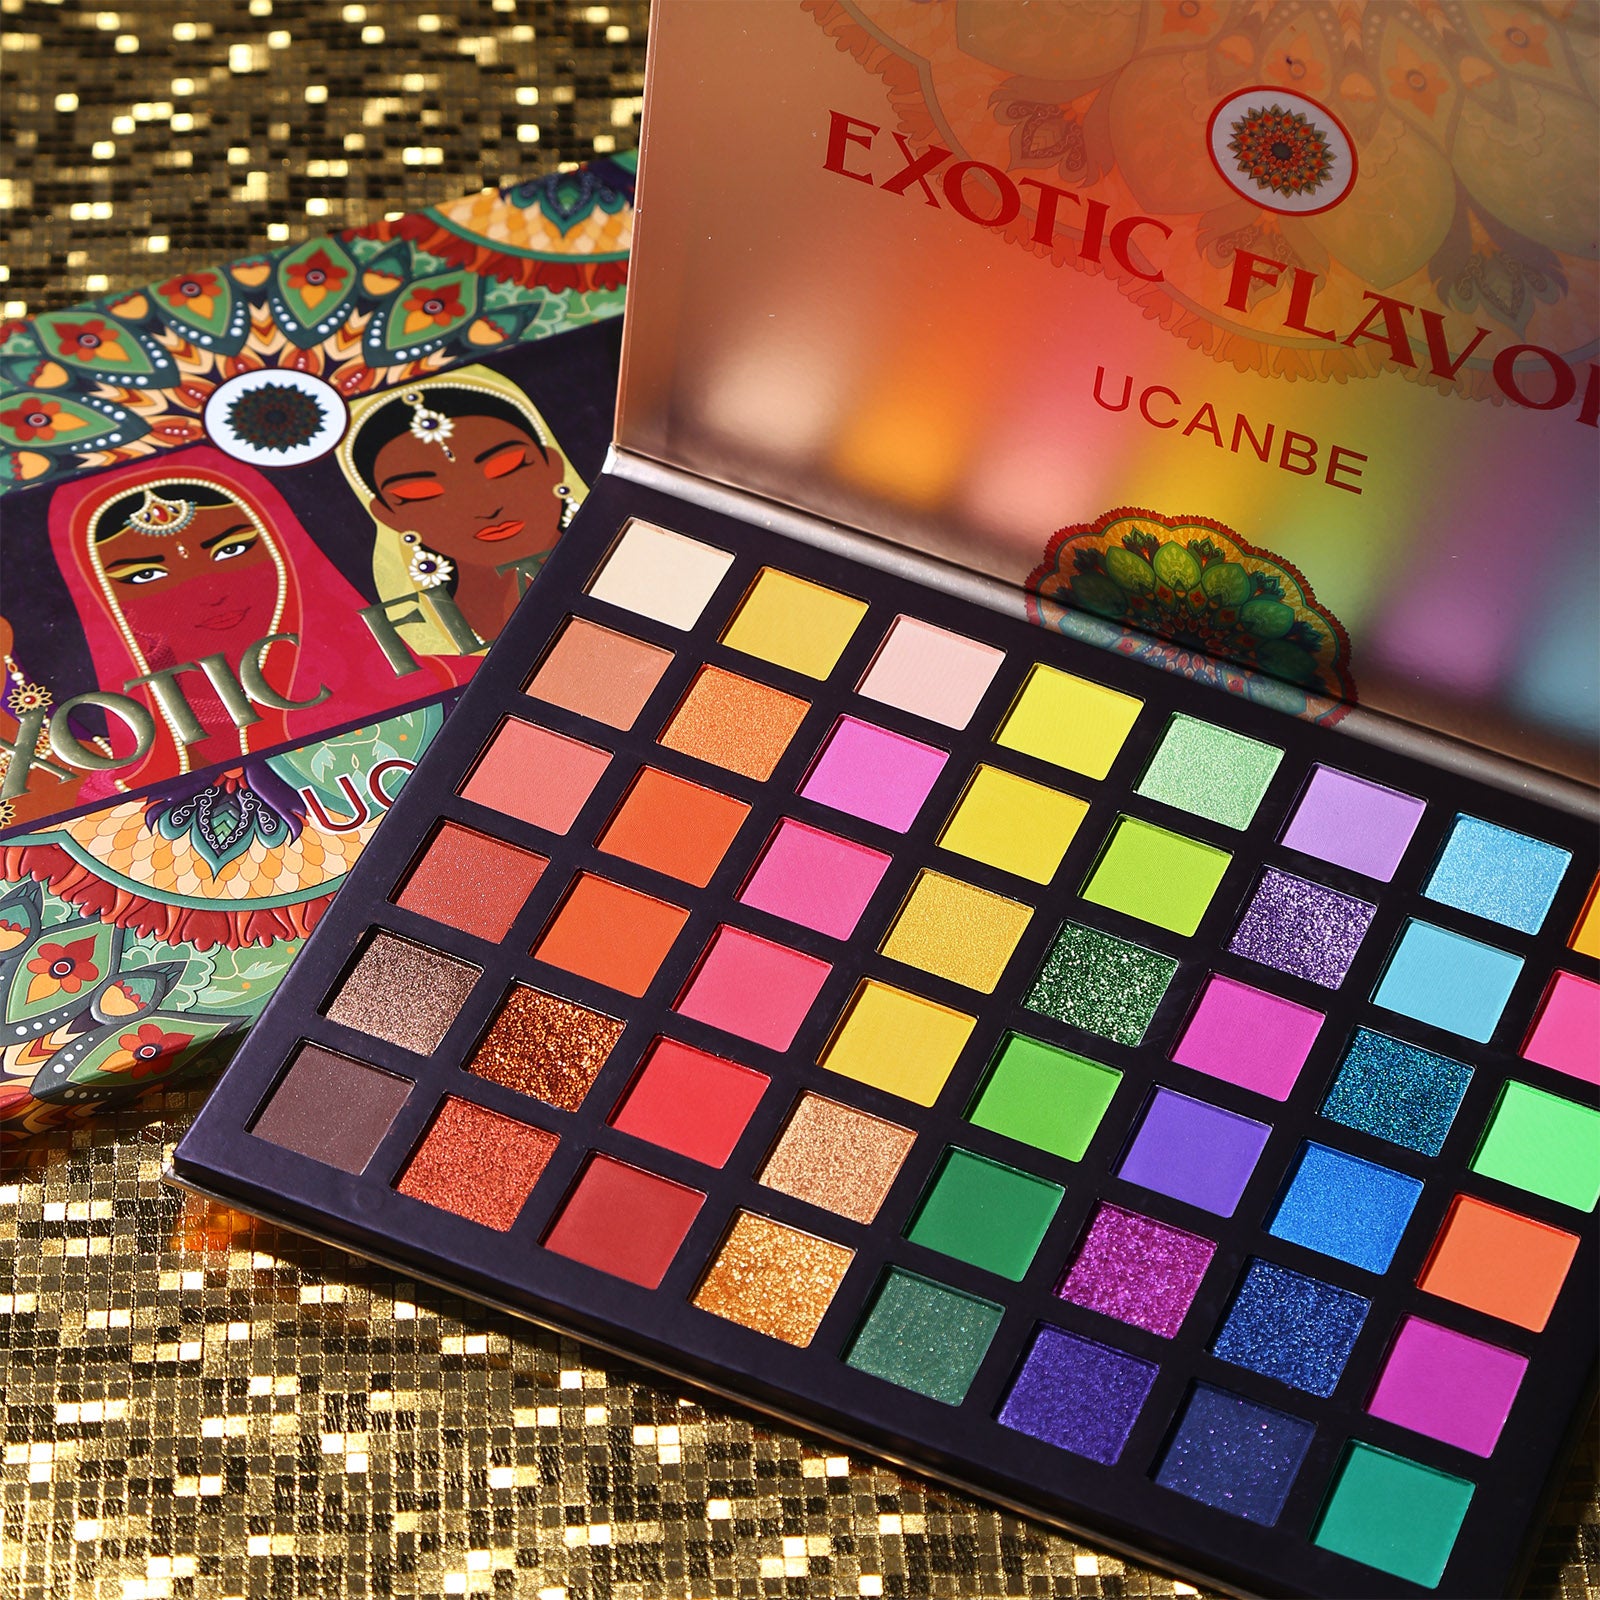 48 Colors Exotic Flavors Eyeshadow Palette – UCANBE